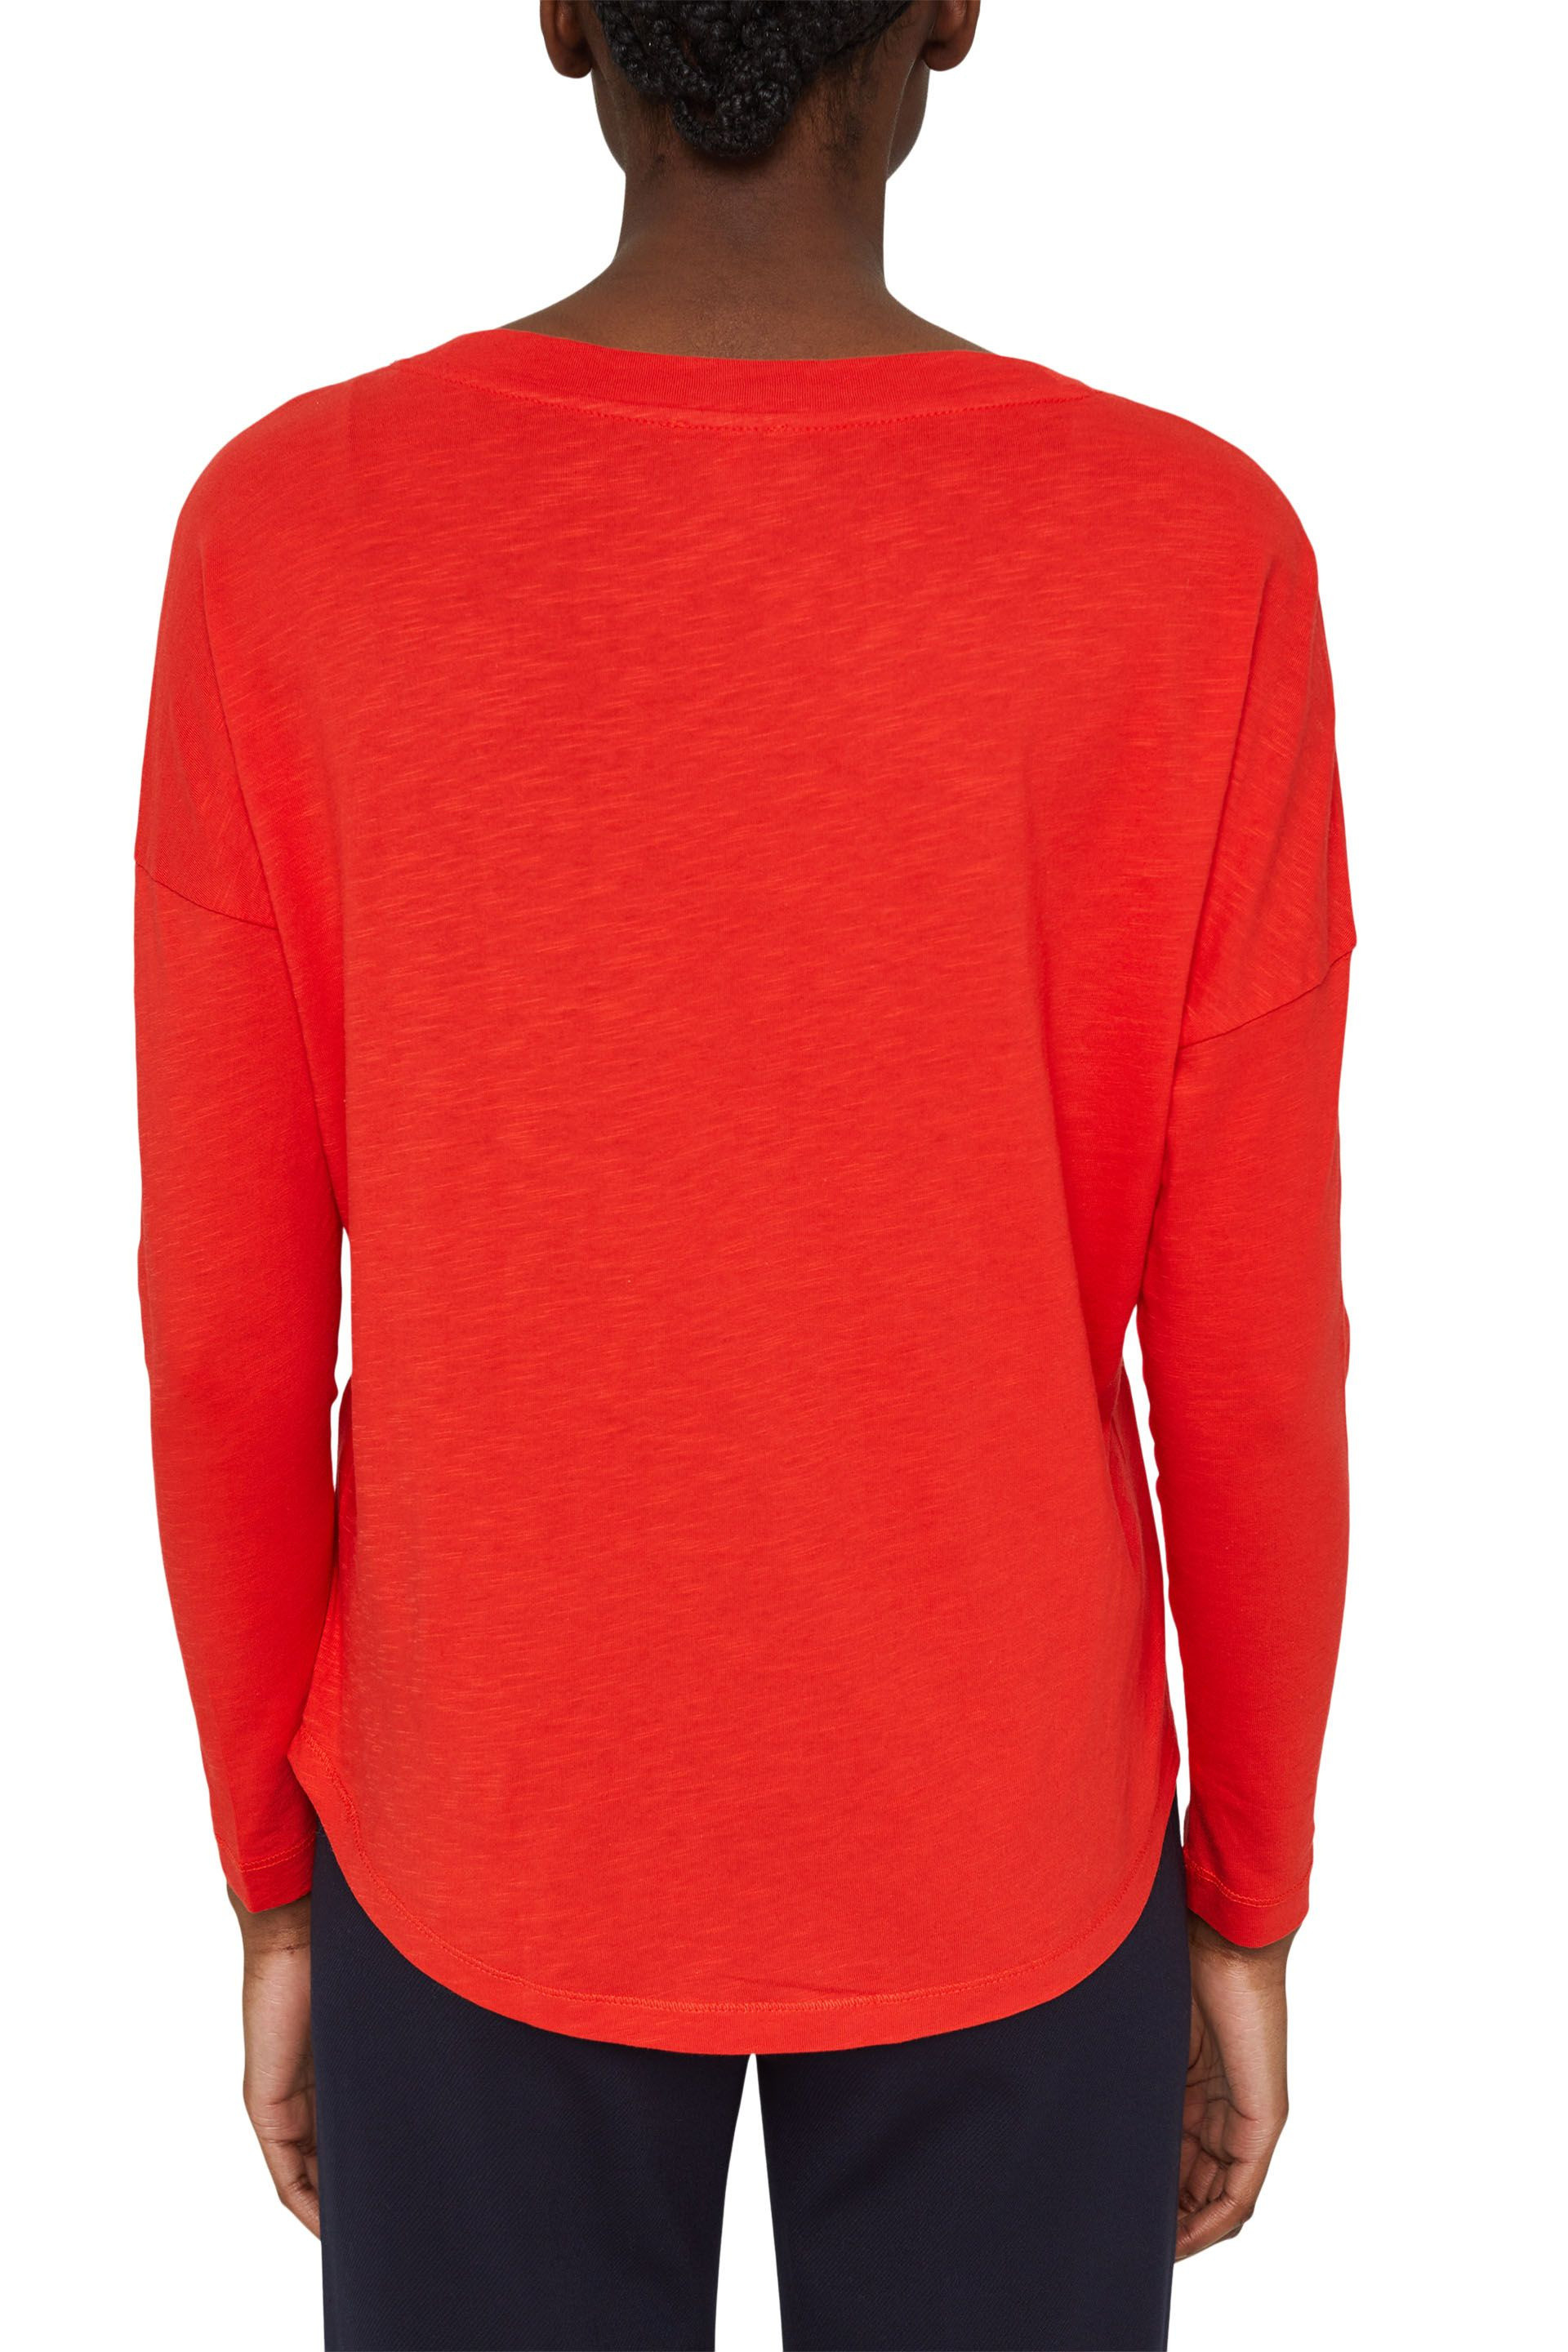 T-shirt a maniche lunghe con tasca, Arancione, large image number 2